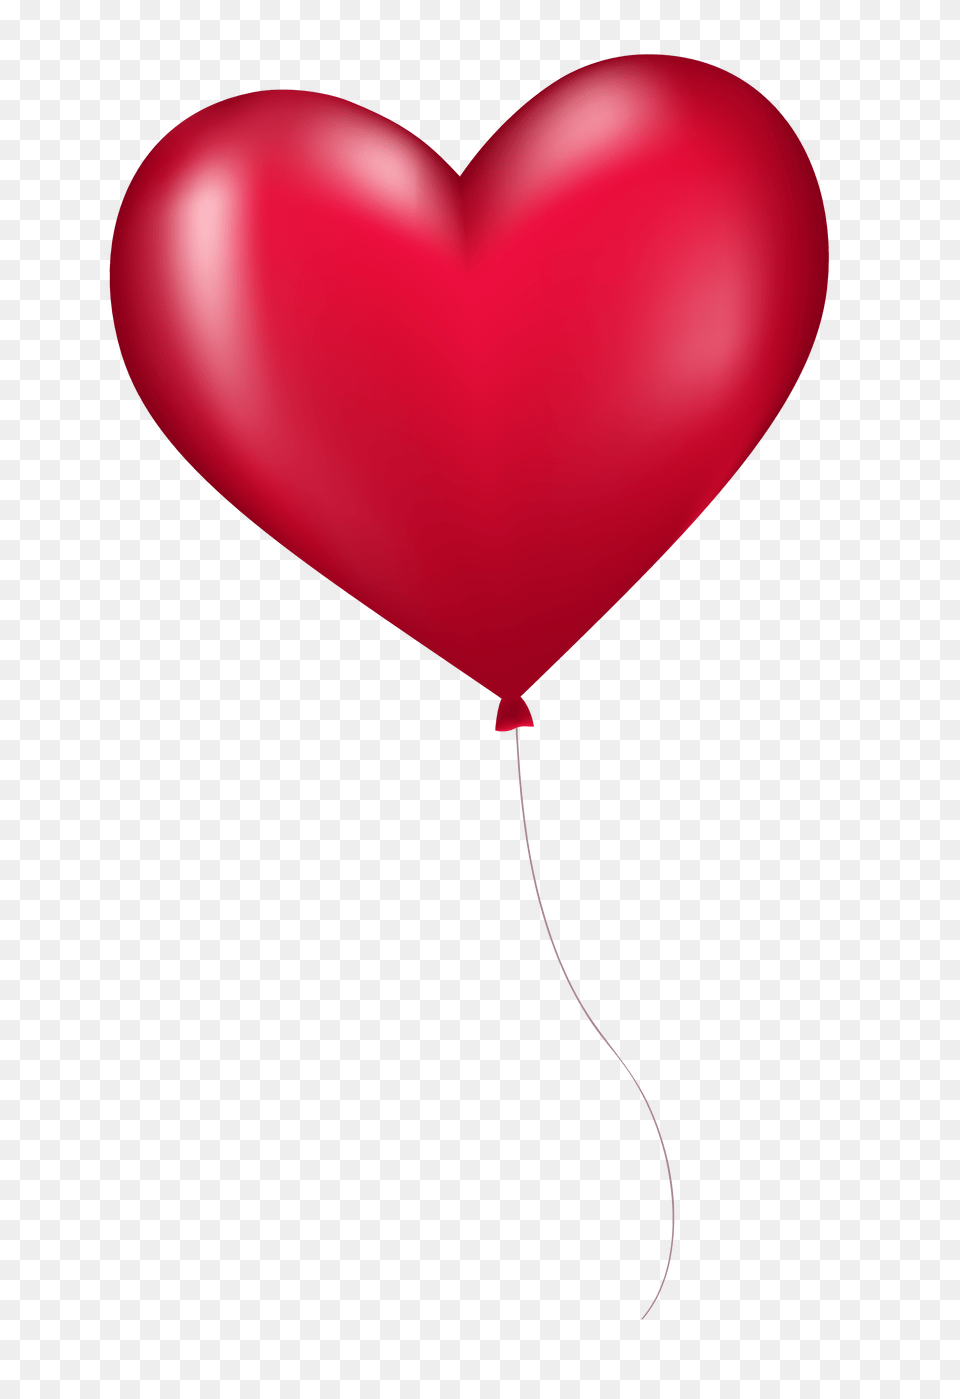 Hd Heart Balloon Image Best Heart Shape Balloon Free Transparent Png